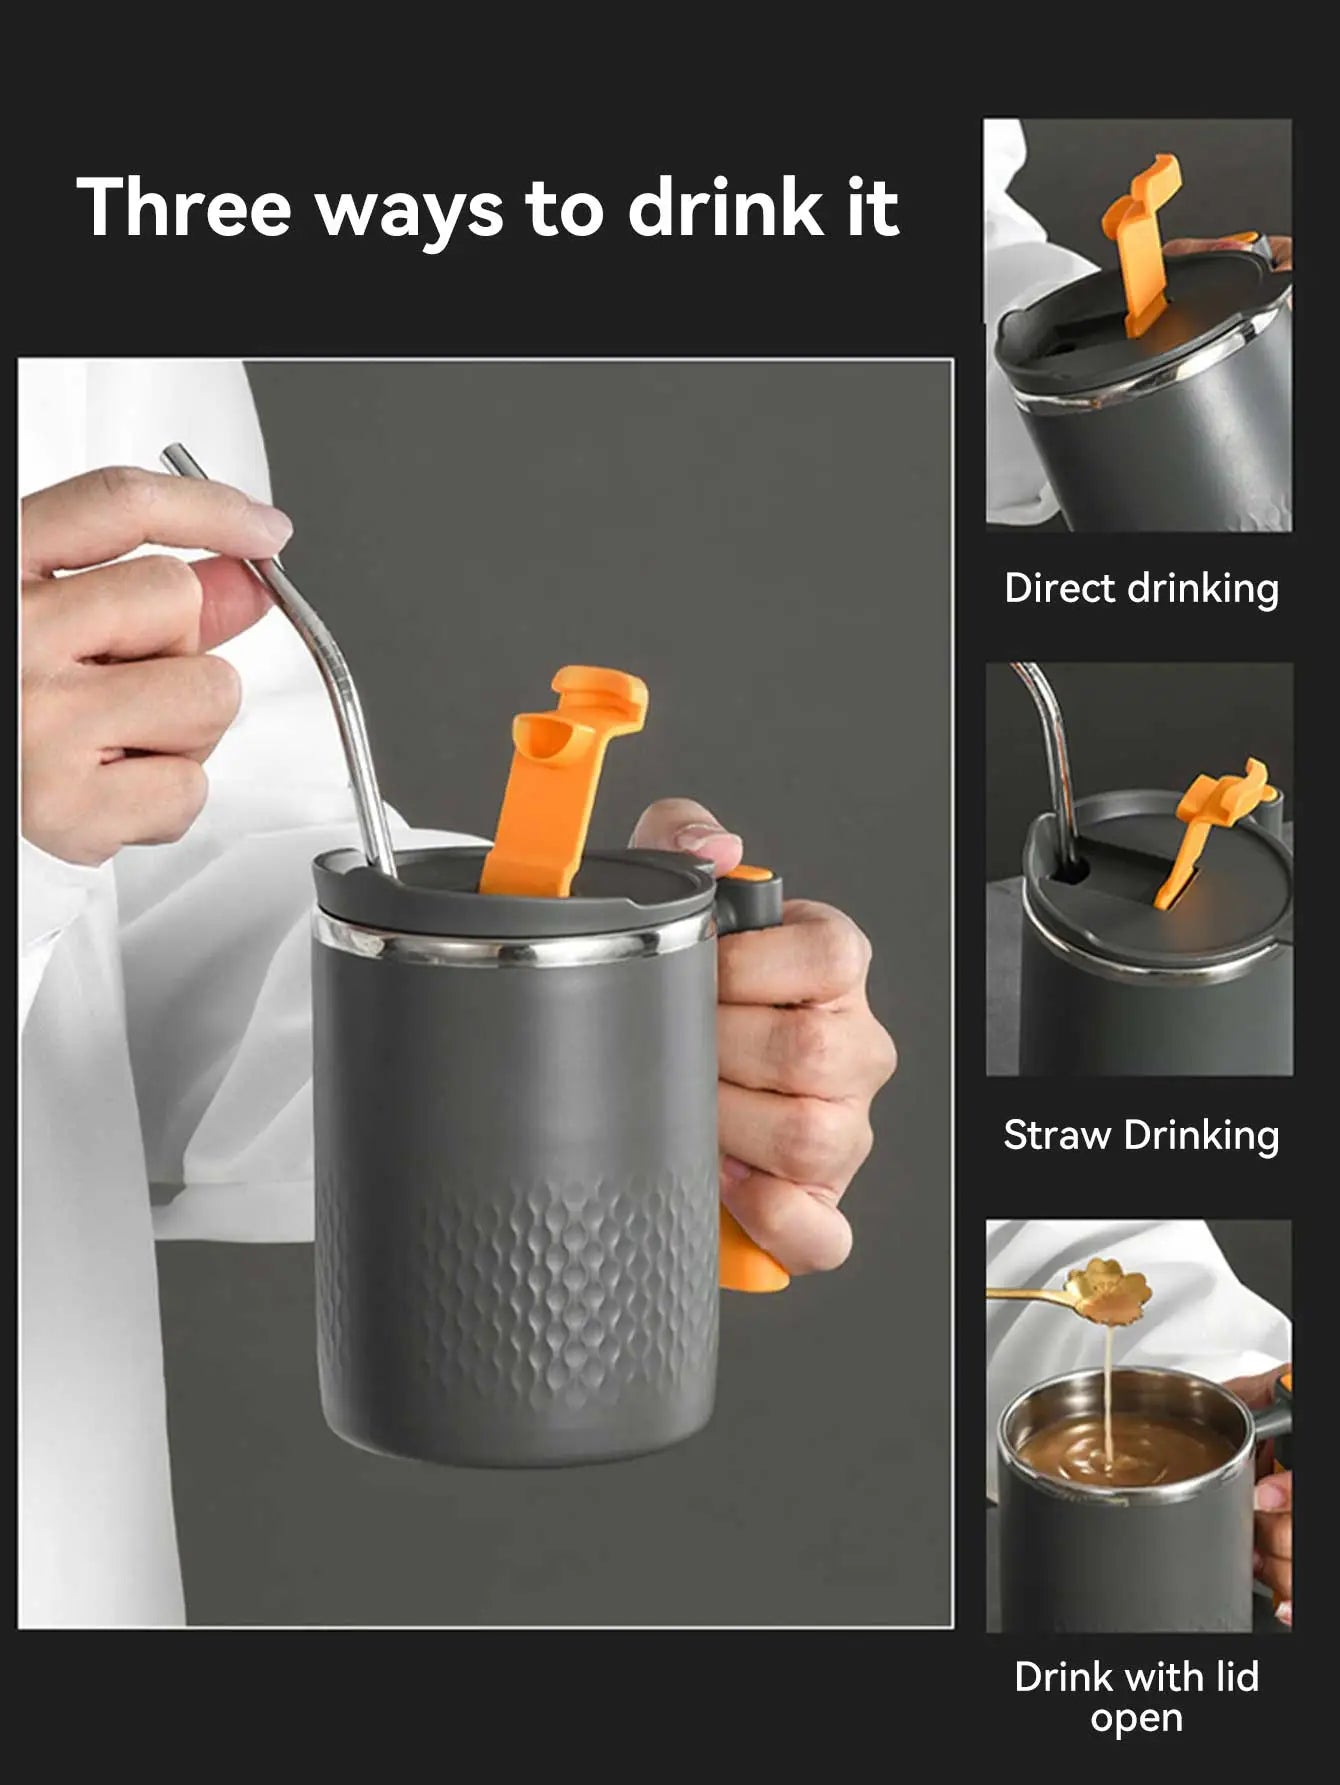 WORTHBUY 18/8 Stainless Steel Coffee Cup Mug With Lid Coffee Mug Double Wall Coffee Tumbler With Handle Heat-resistant Drinkware